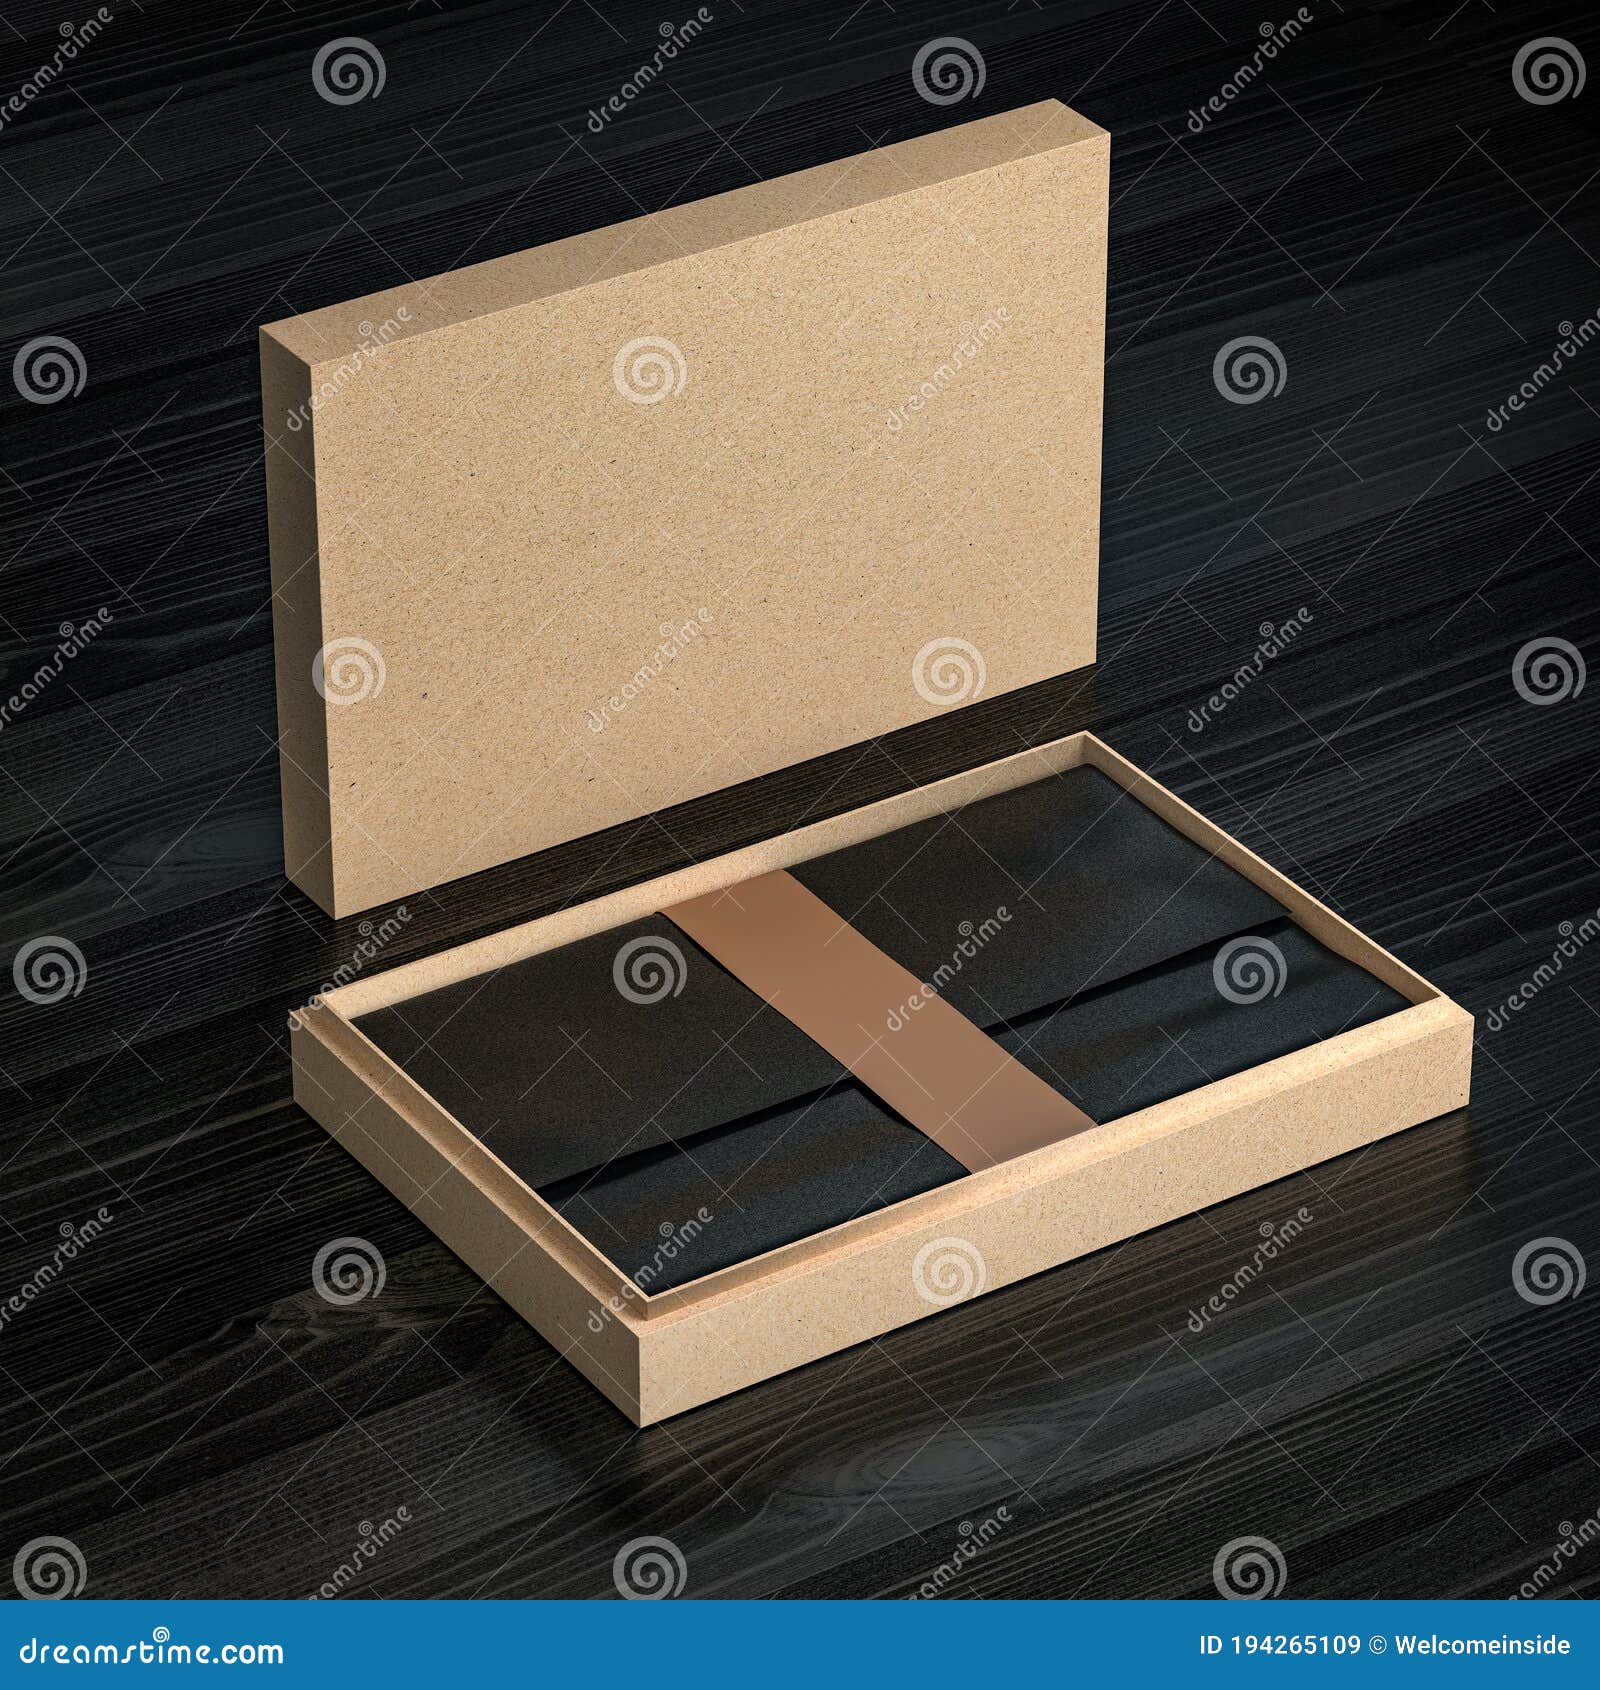 Download Cardboard Gift Present Box Mockup With Black Craft ...